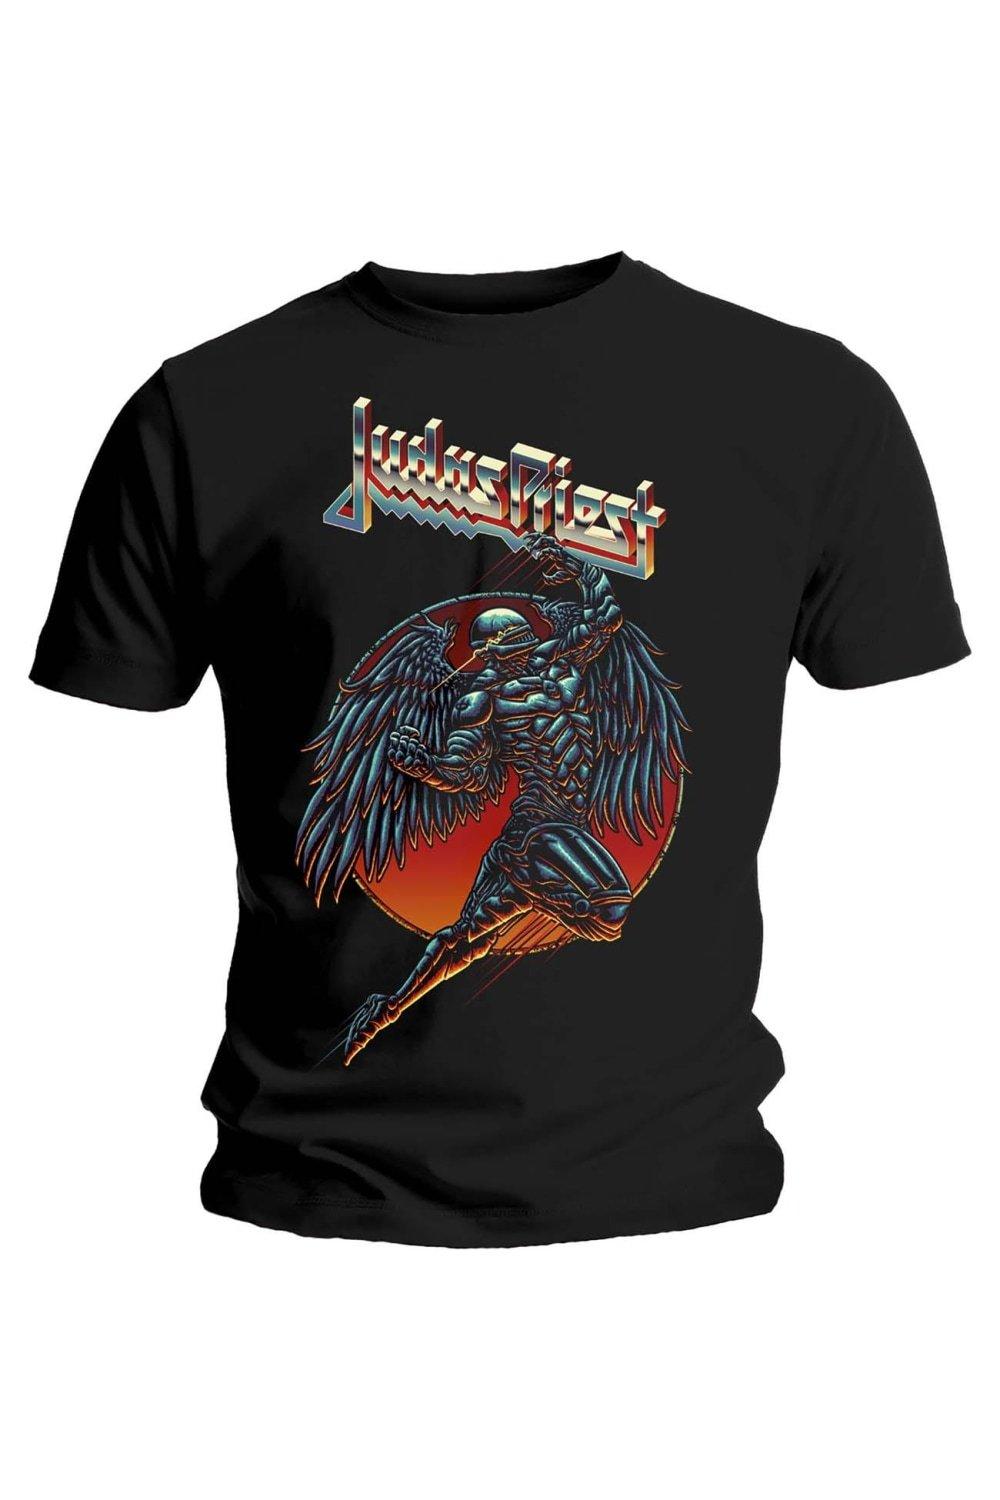 Хлопковая футболка BTD Redeemer Judas Priest, черный the redeemer